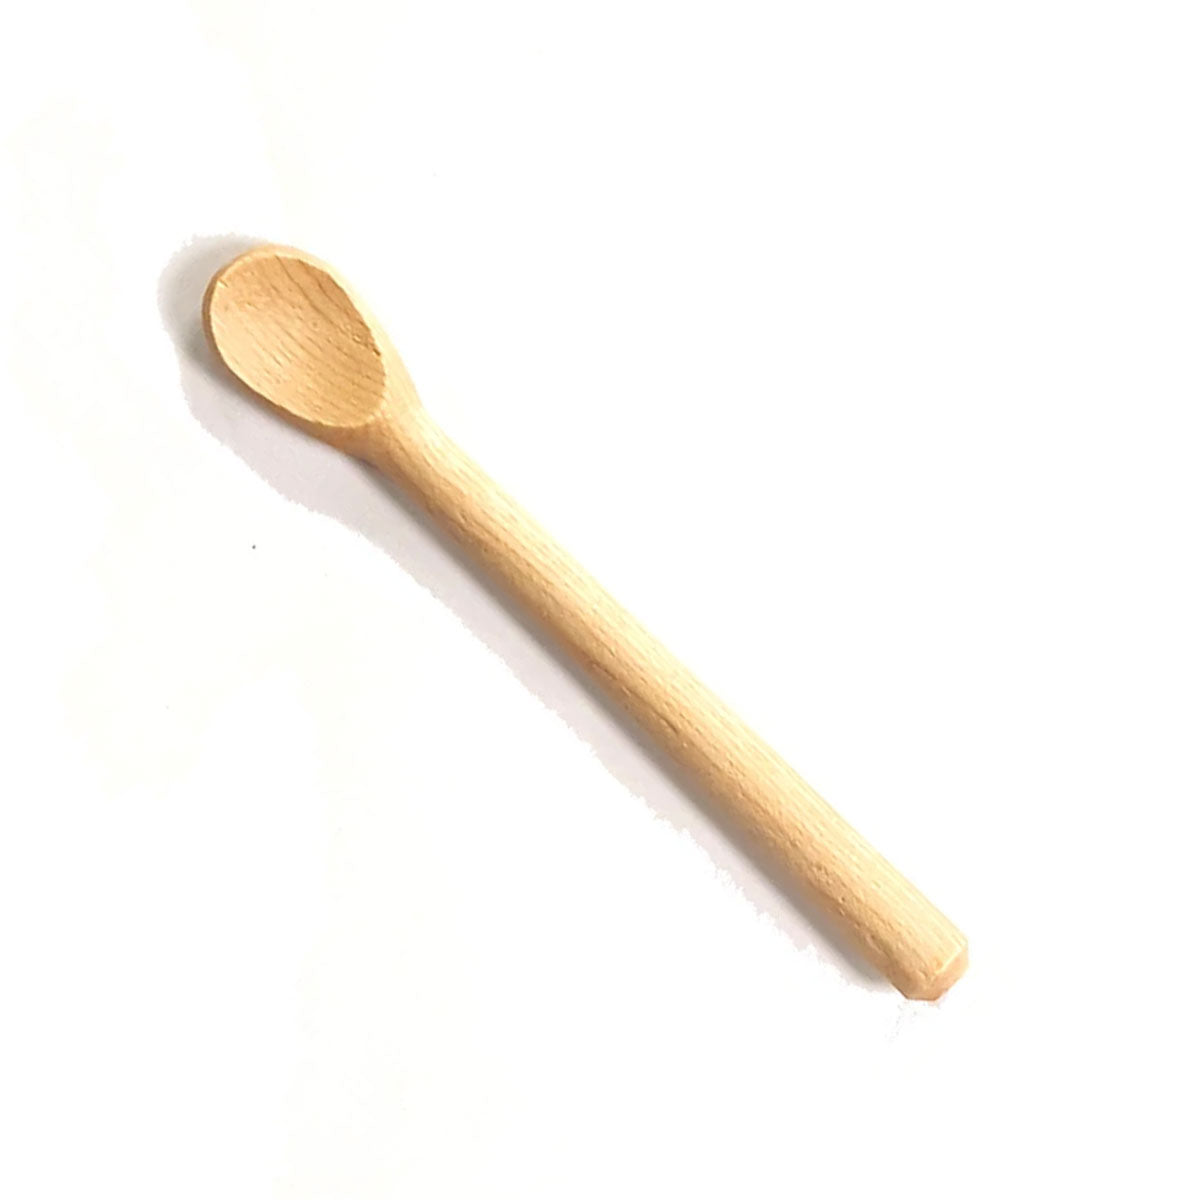 Cane Tree Wood Spoon, 4 inch